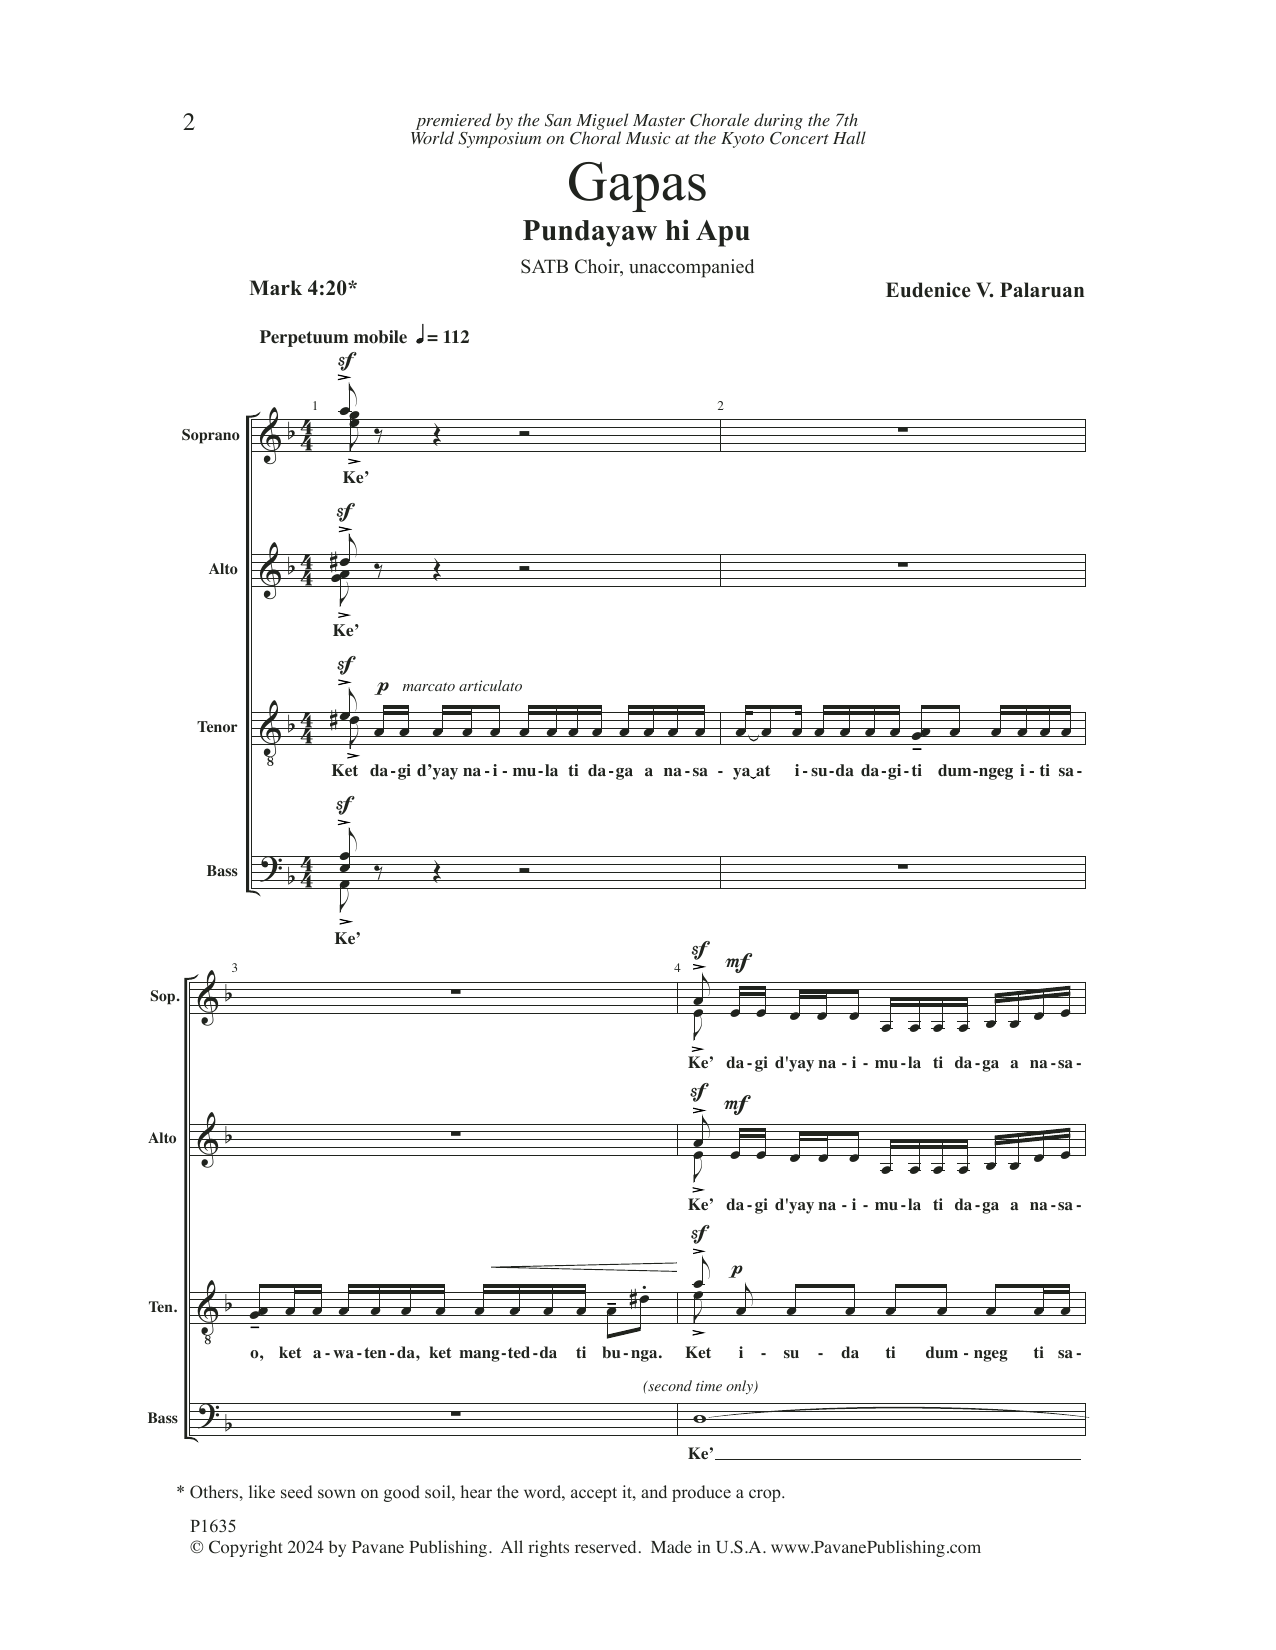 Eudenice V. Palaruan Gapas (Pundayaw hi Apu) Sheet Music Notes & Chords for SATB Choir - Download or Print PDF